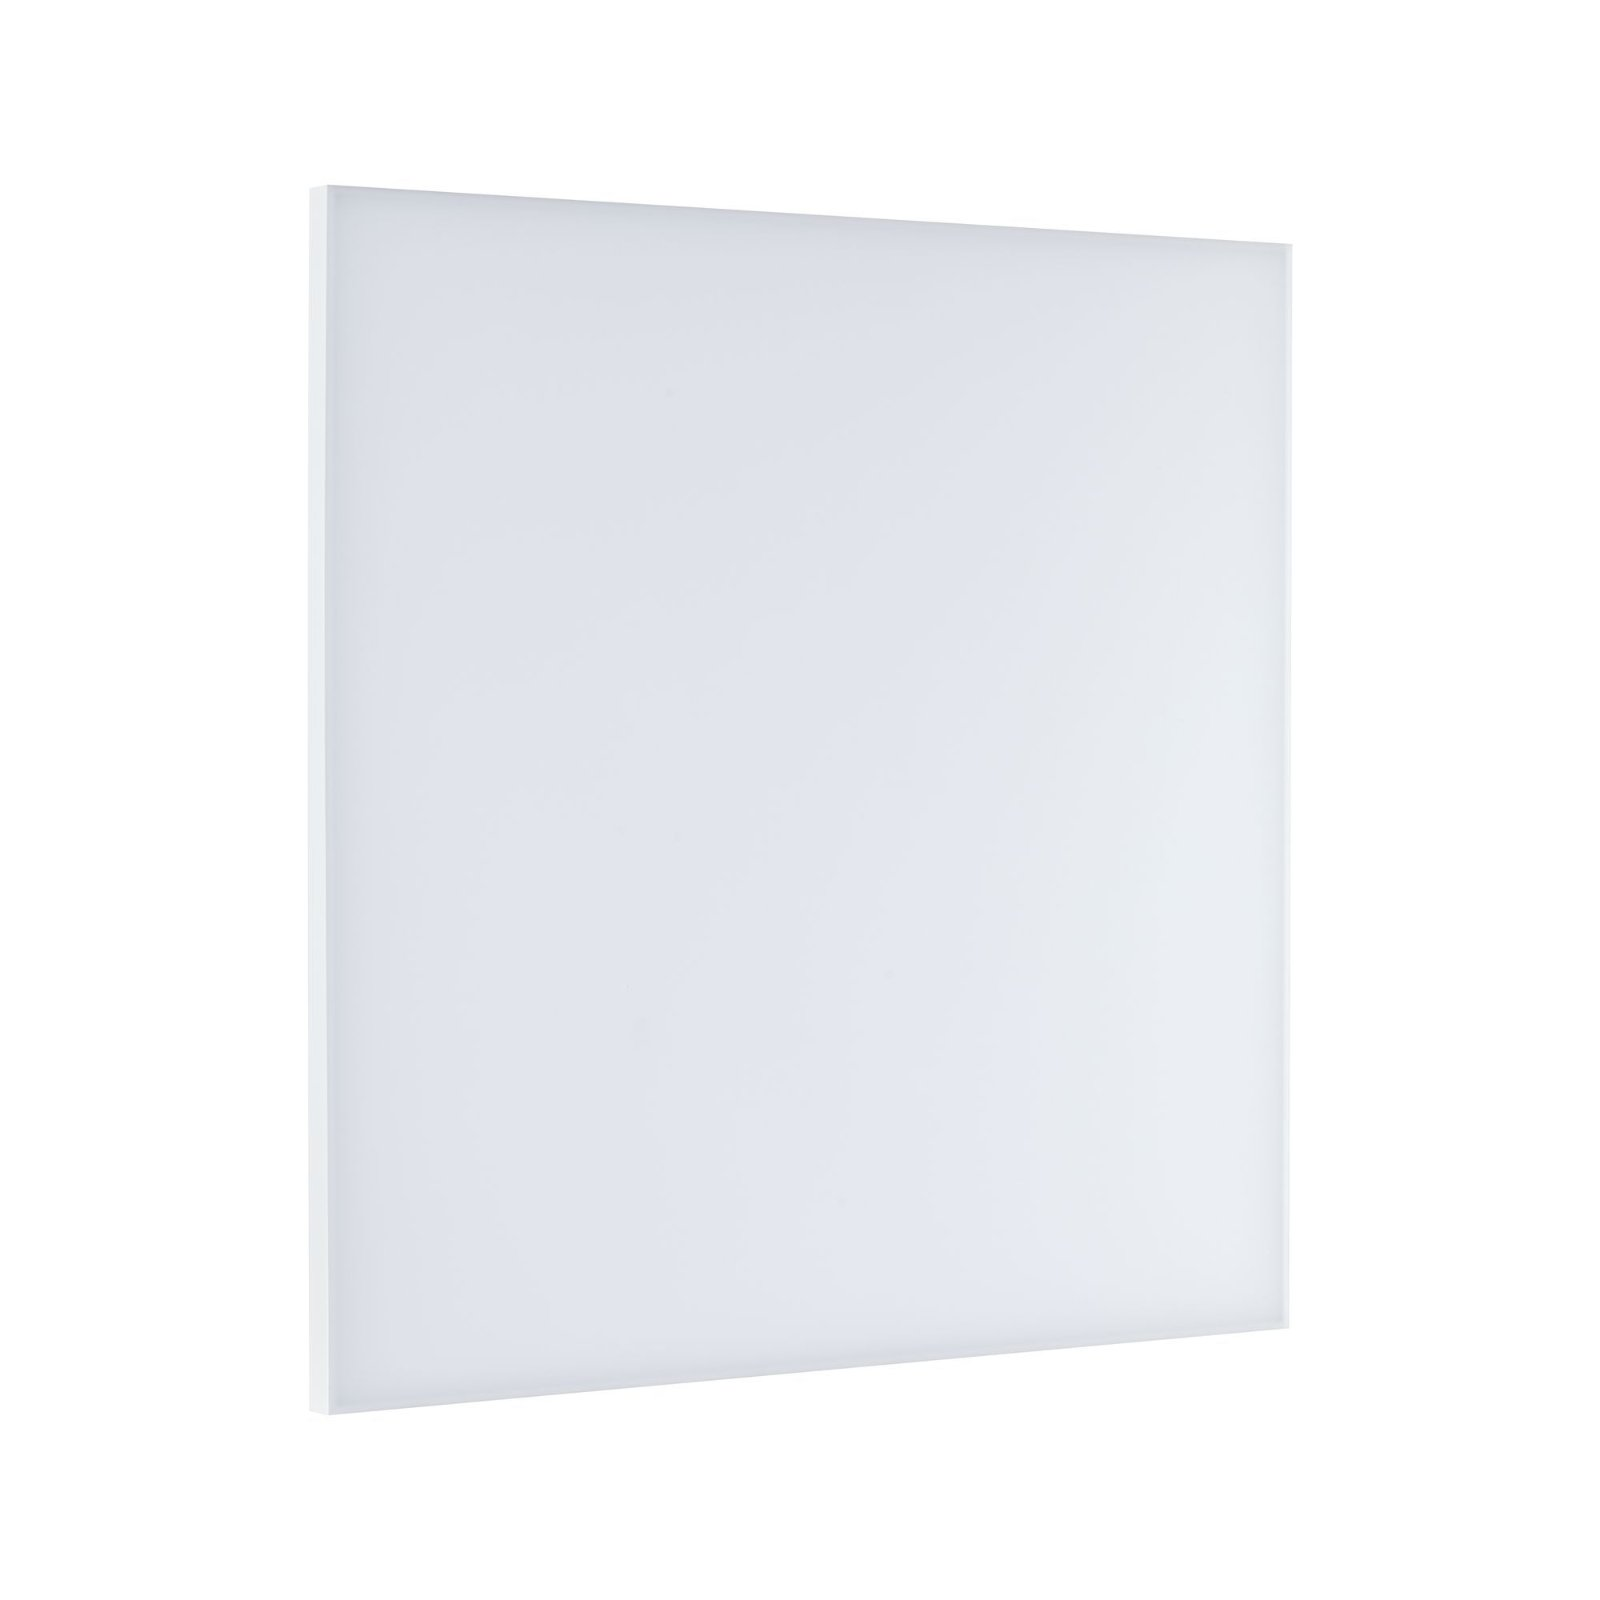 PAULMANN LICHT Velora (79826) White Panel LED Tunable